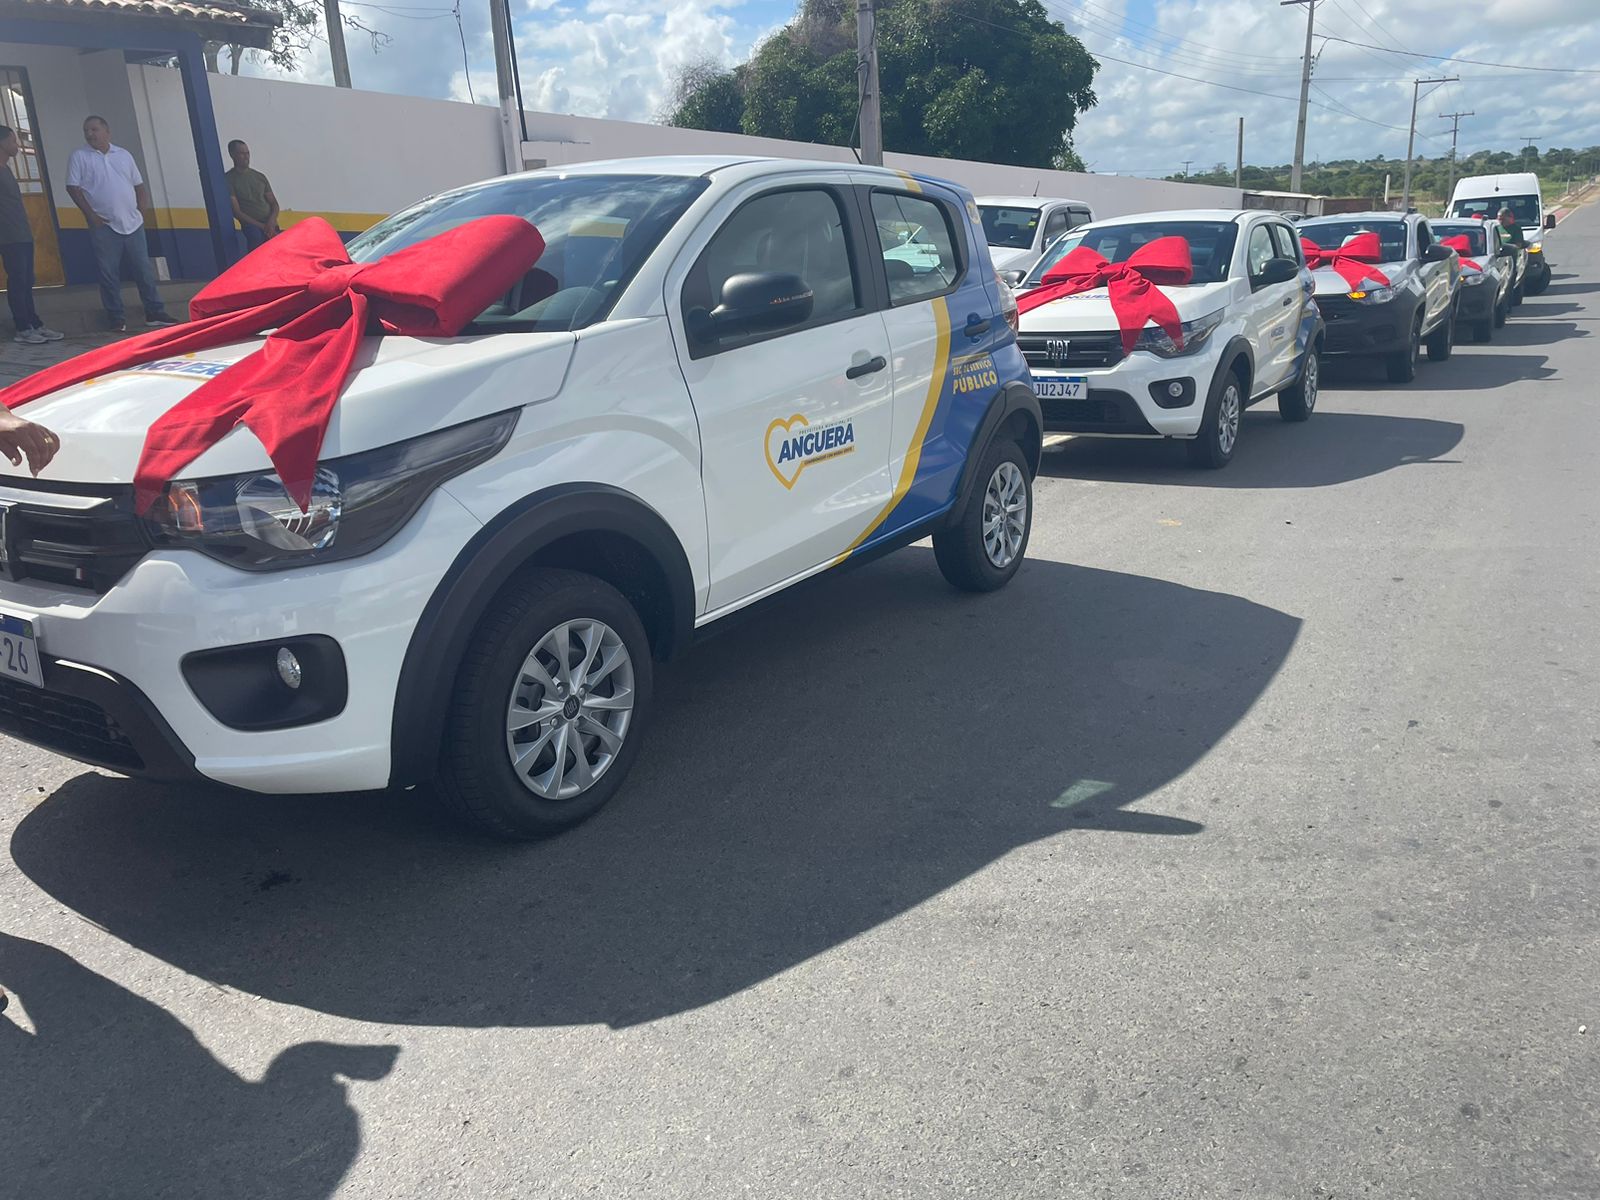 Prefeito de Anguera entrega 6 carros zero km para reforçar a frota do município